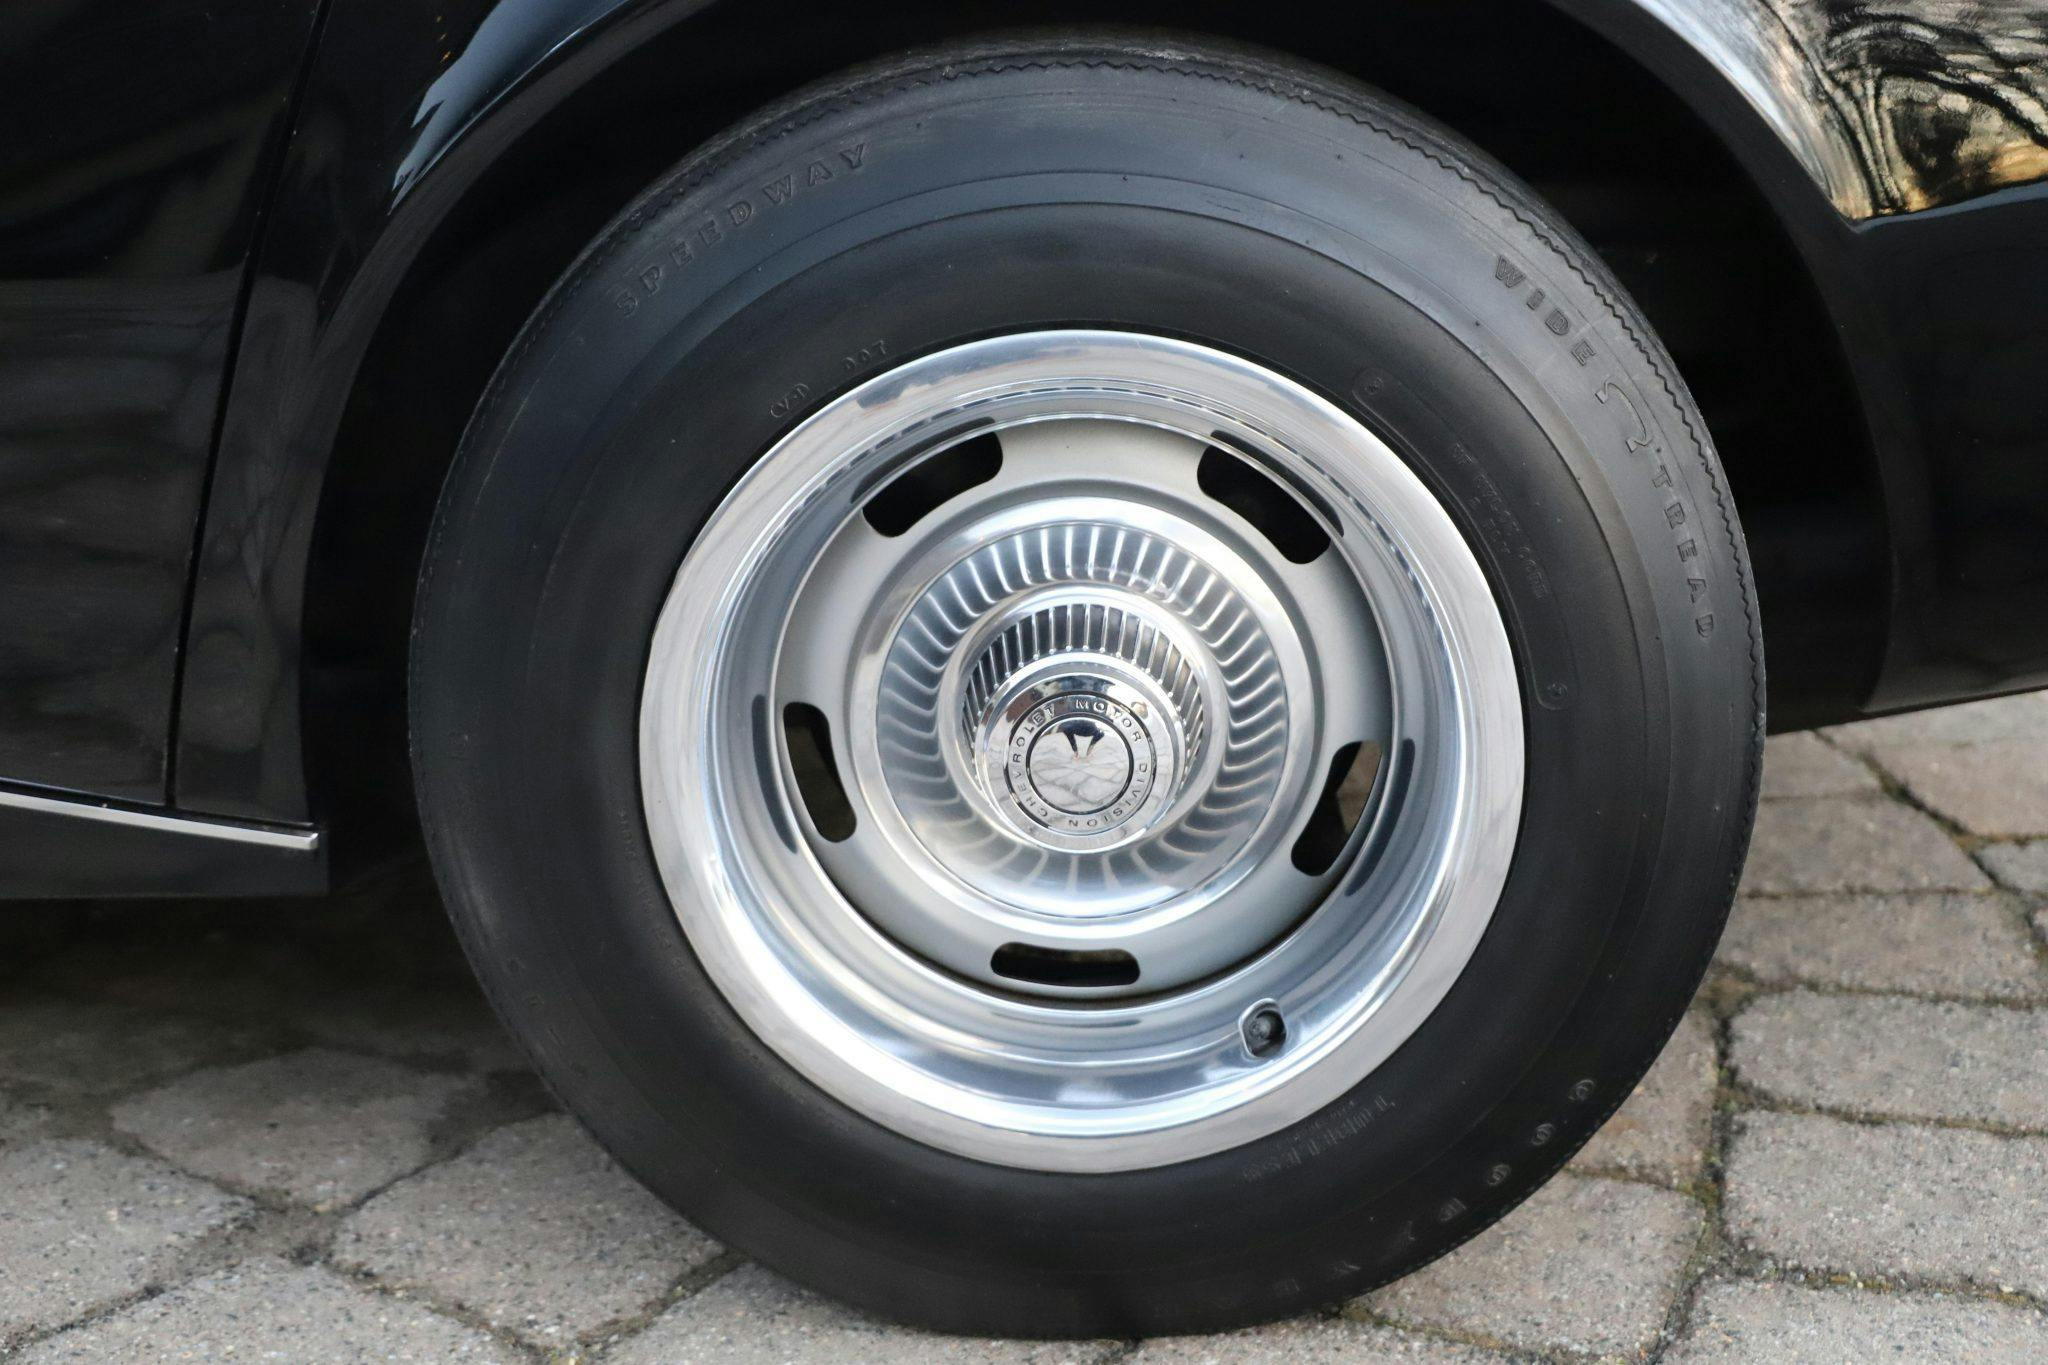 1969 Chevrolet Corvette L88 coupe Tuxedo Black wheel